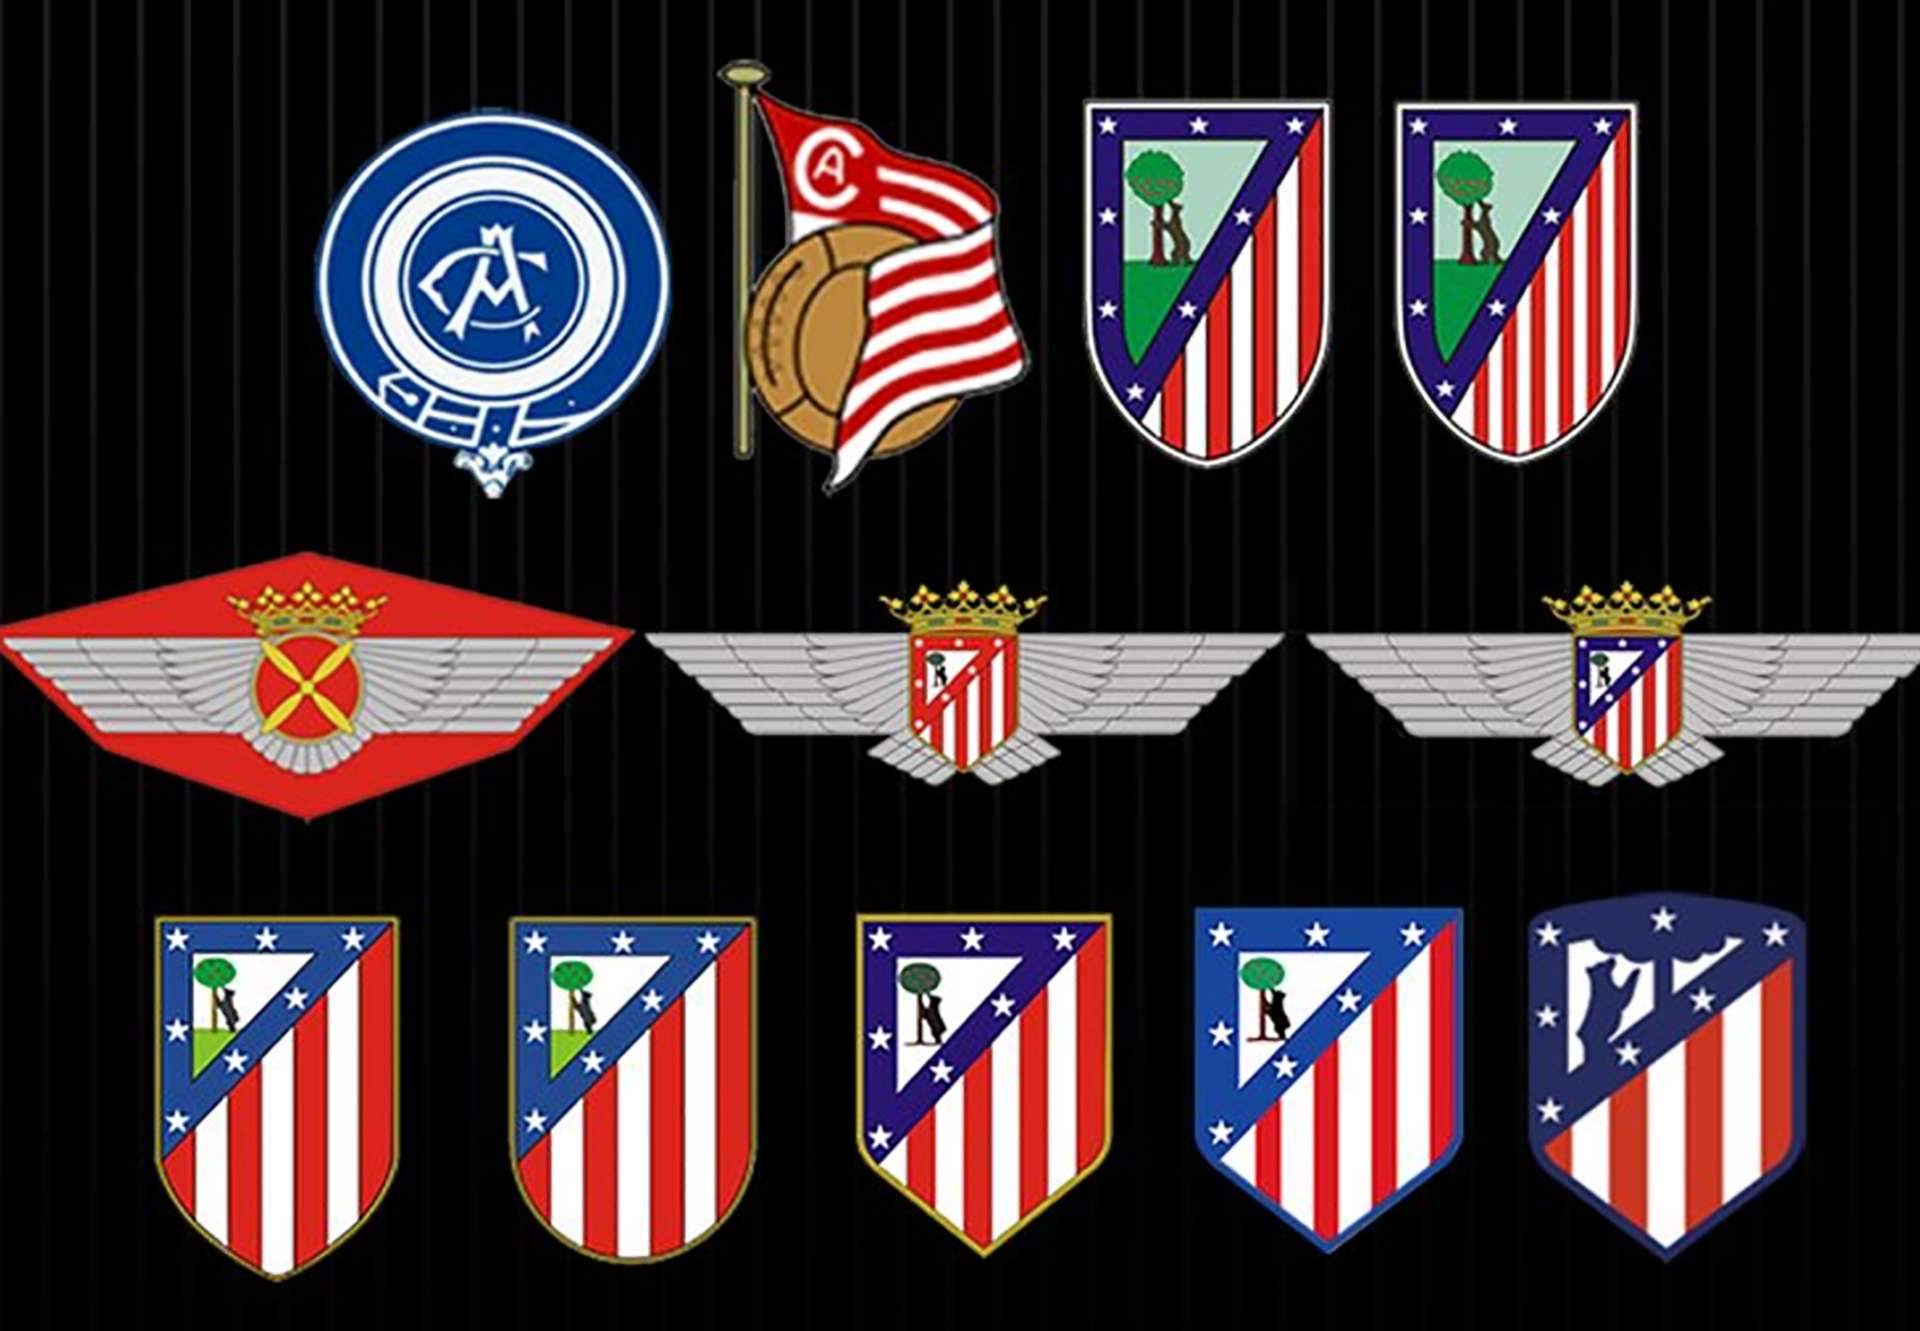 Atletico Madrid logos